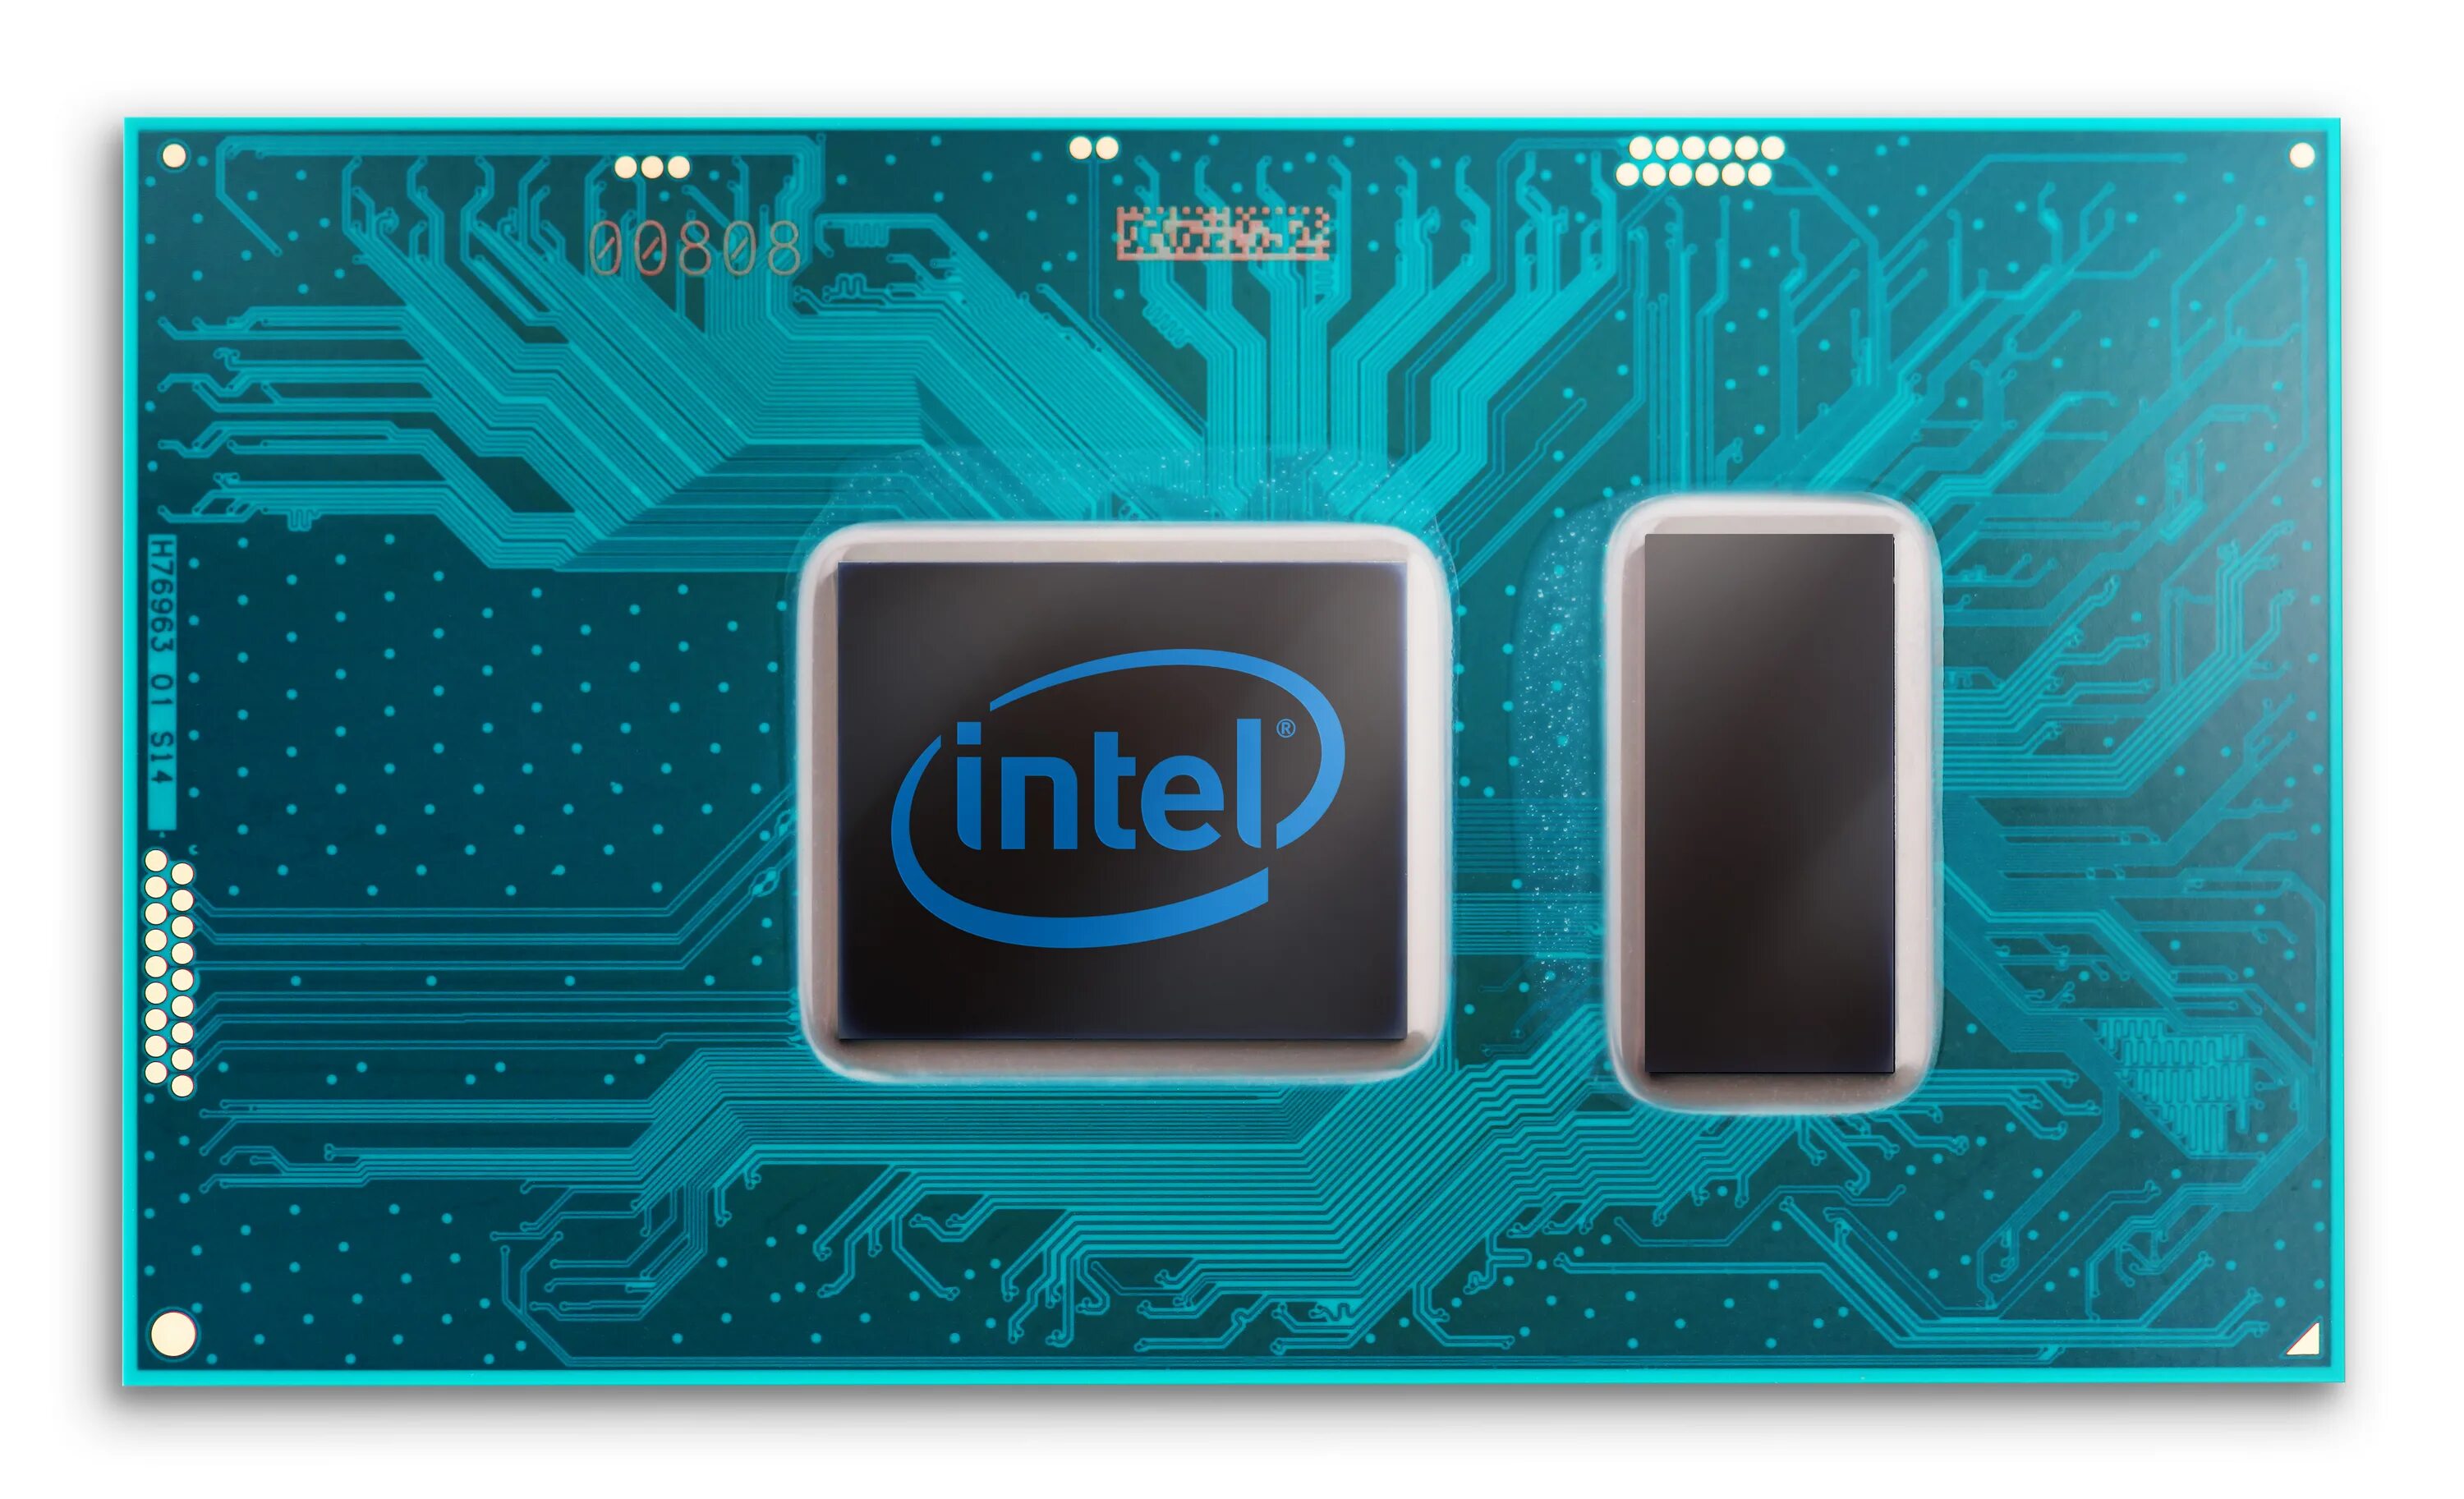 Intel Core i3 1005. Intel Core i3 1005g1 чипсет. Intel Core i3 3 Gen. Intel(r) Core(TM) i3-1005g1. Core i3 games